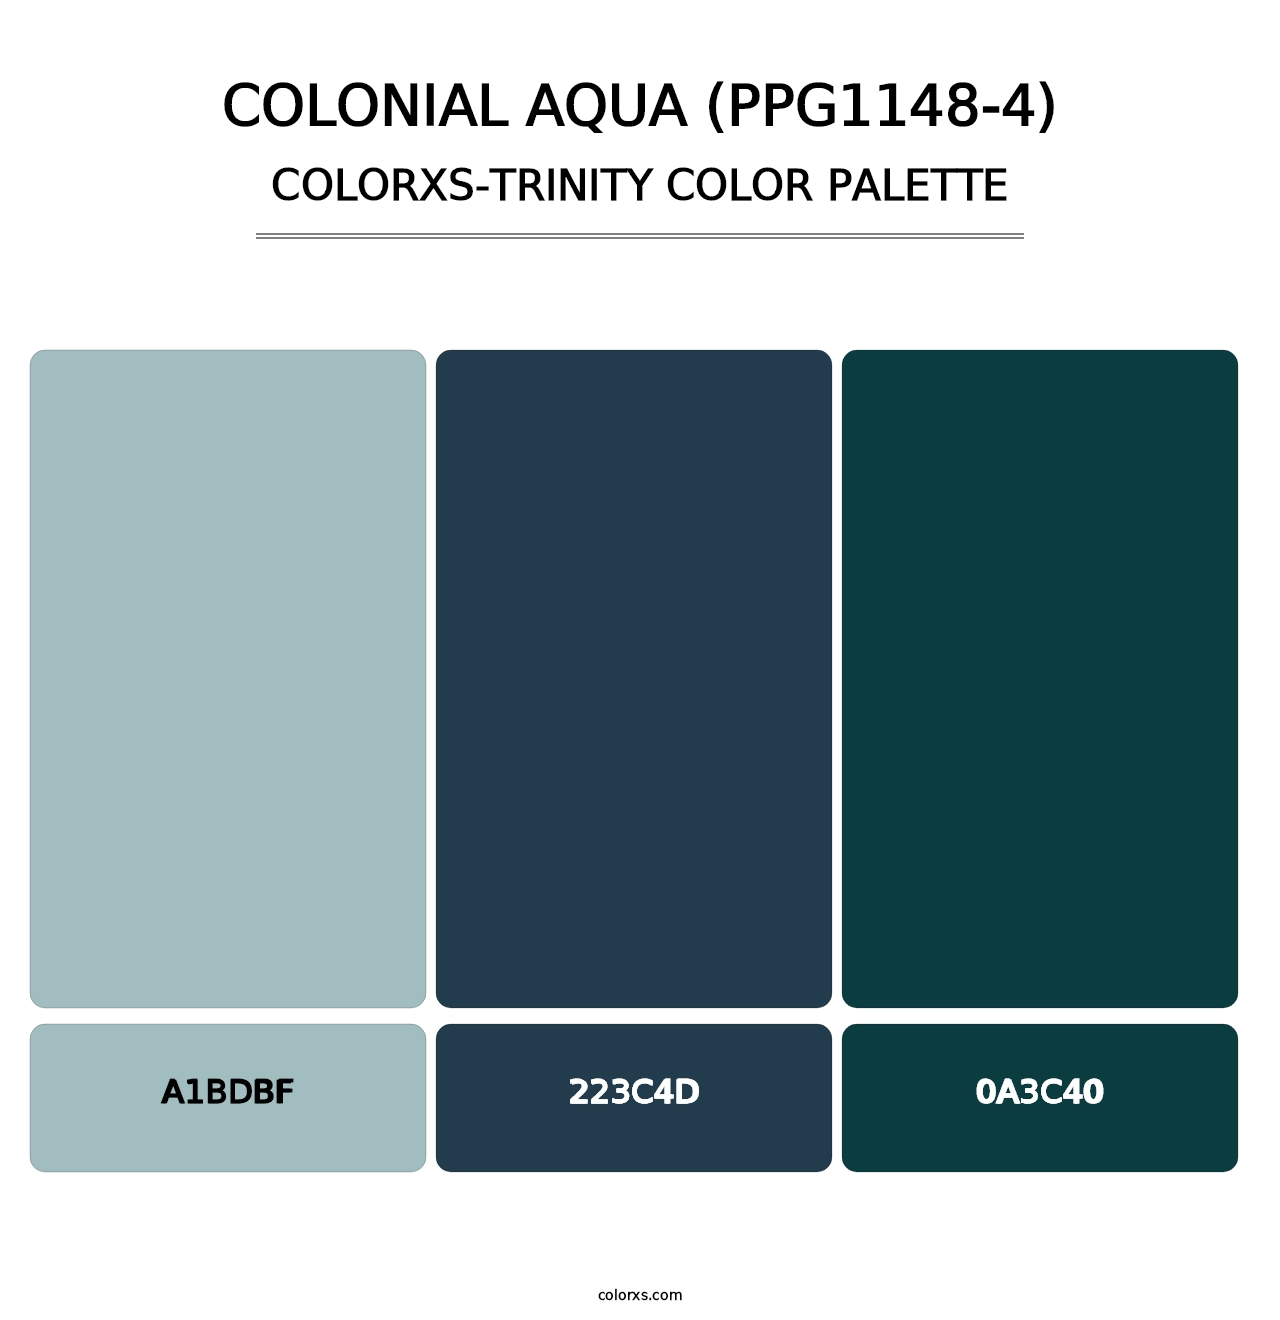 Colonial Aqua (PPG1148-4) - Colorxs Trinity Palette